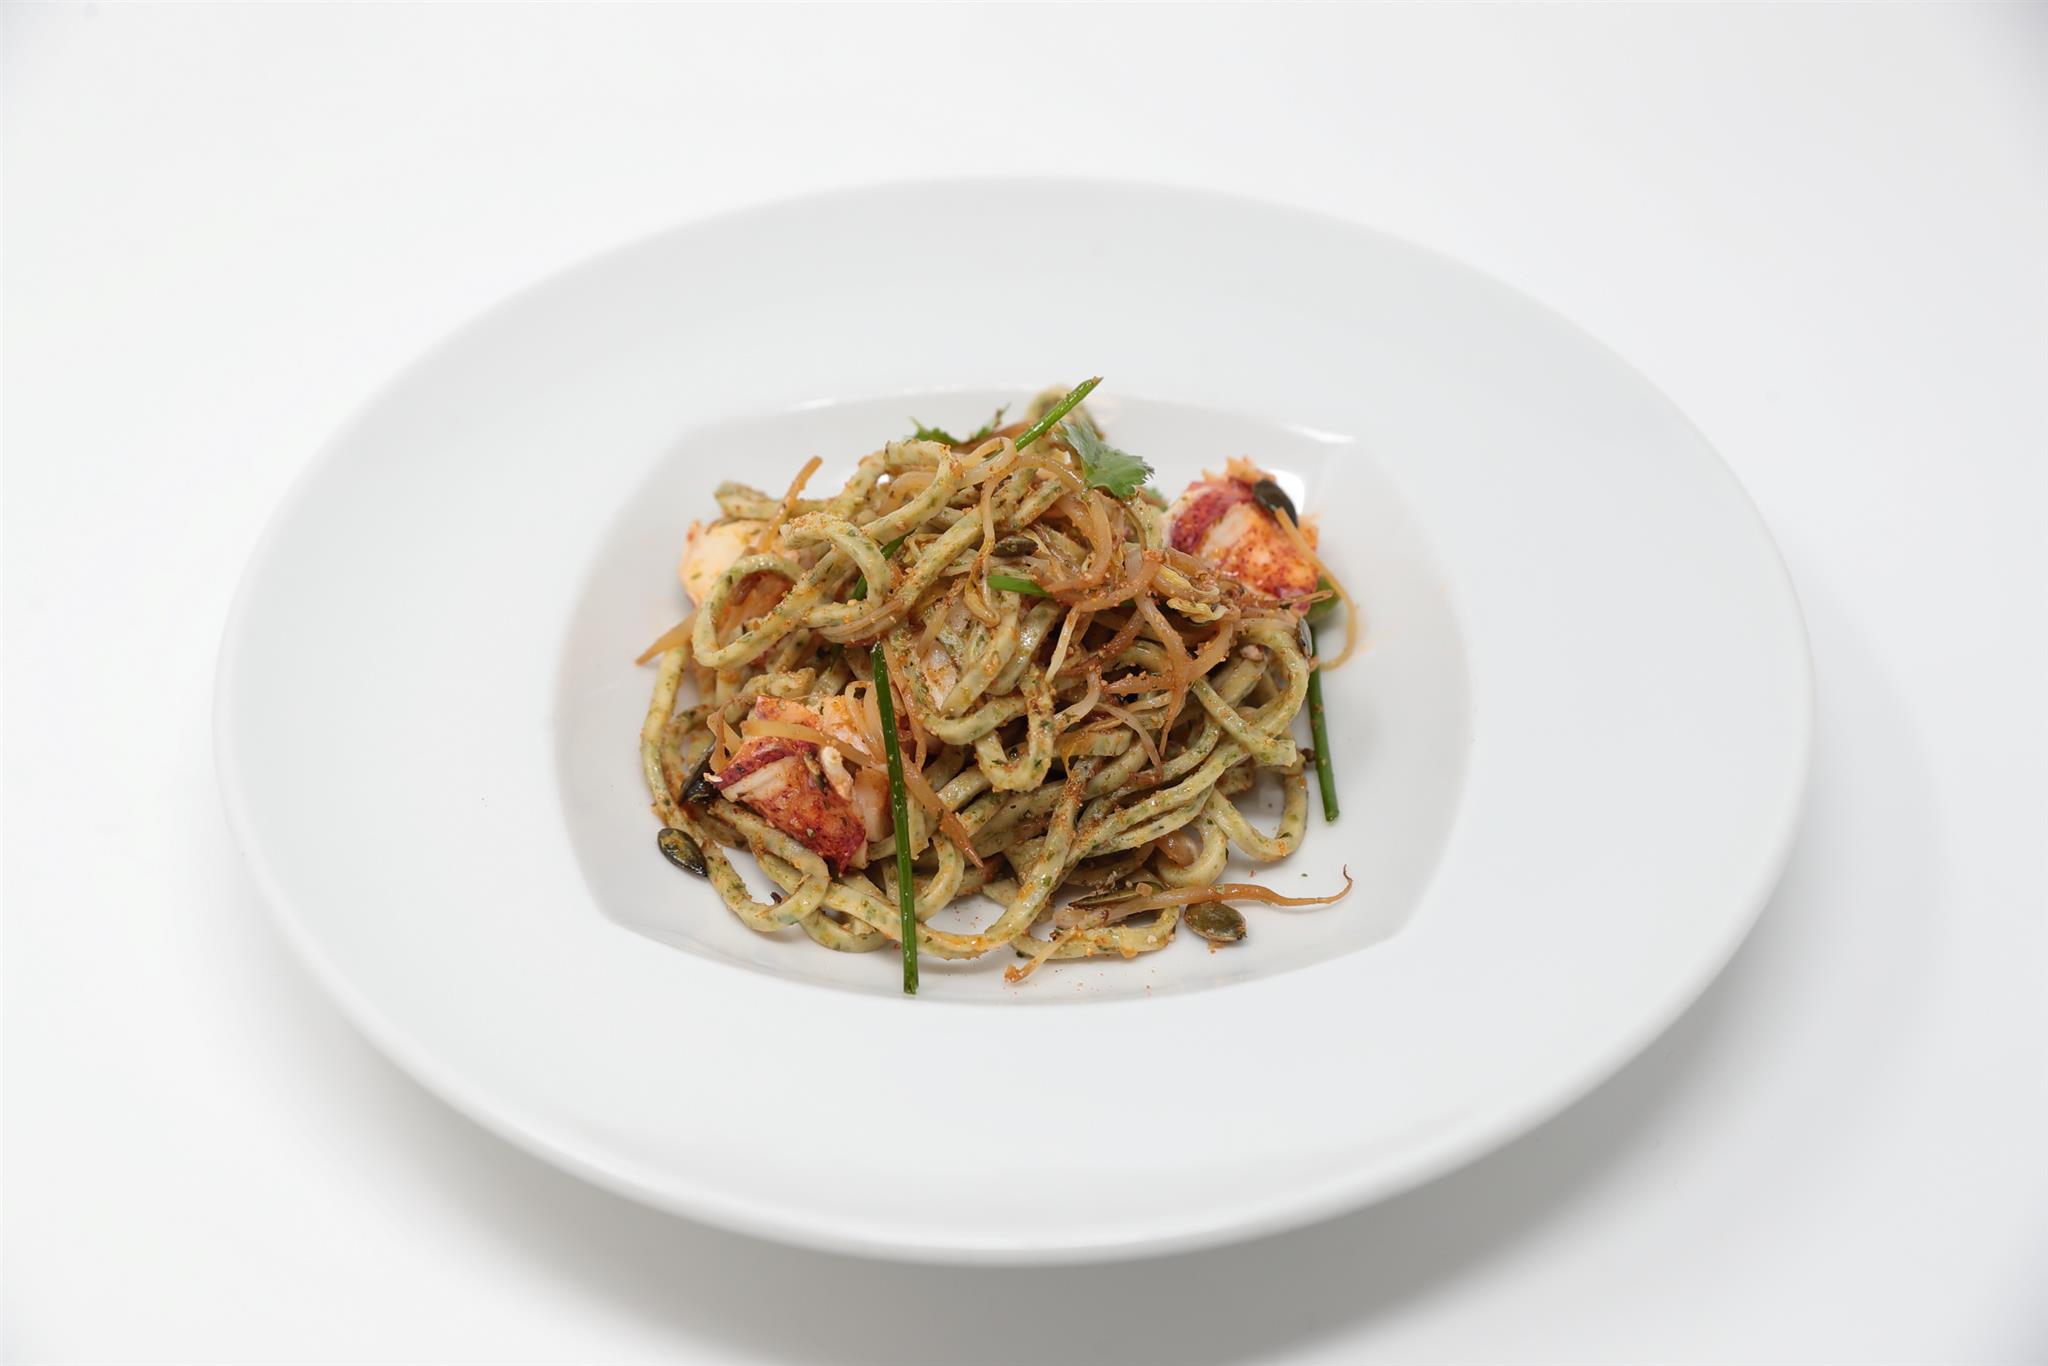 daruma-seasons-chef-barbieri-estate-2018-insalata-spaghetti